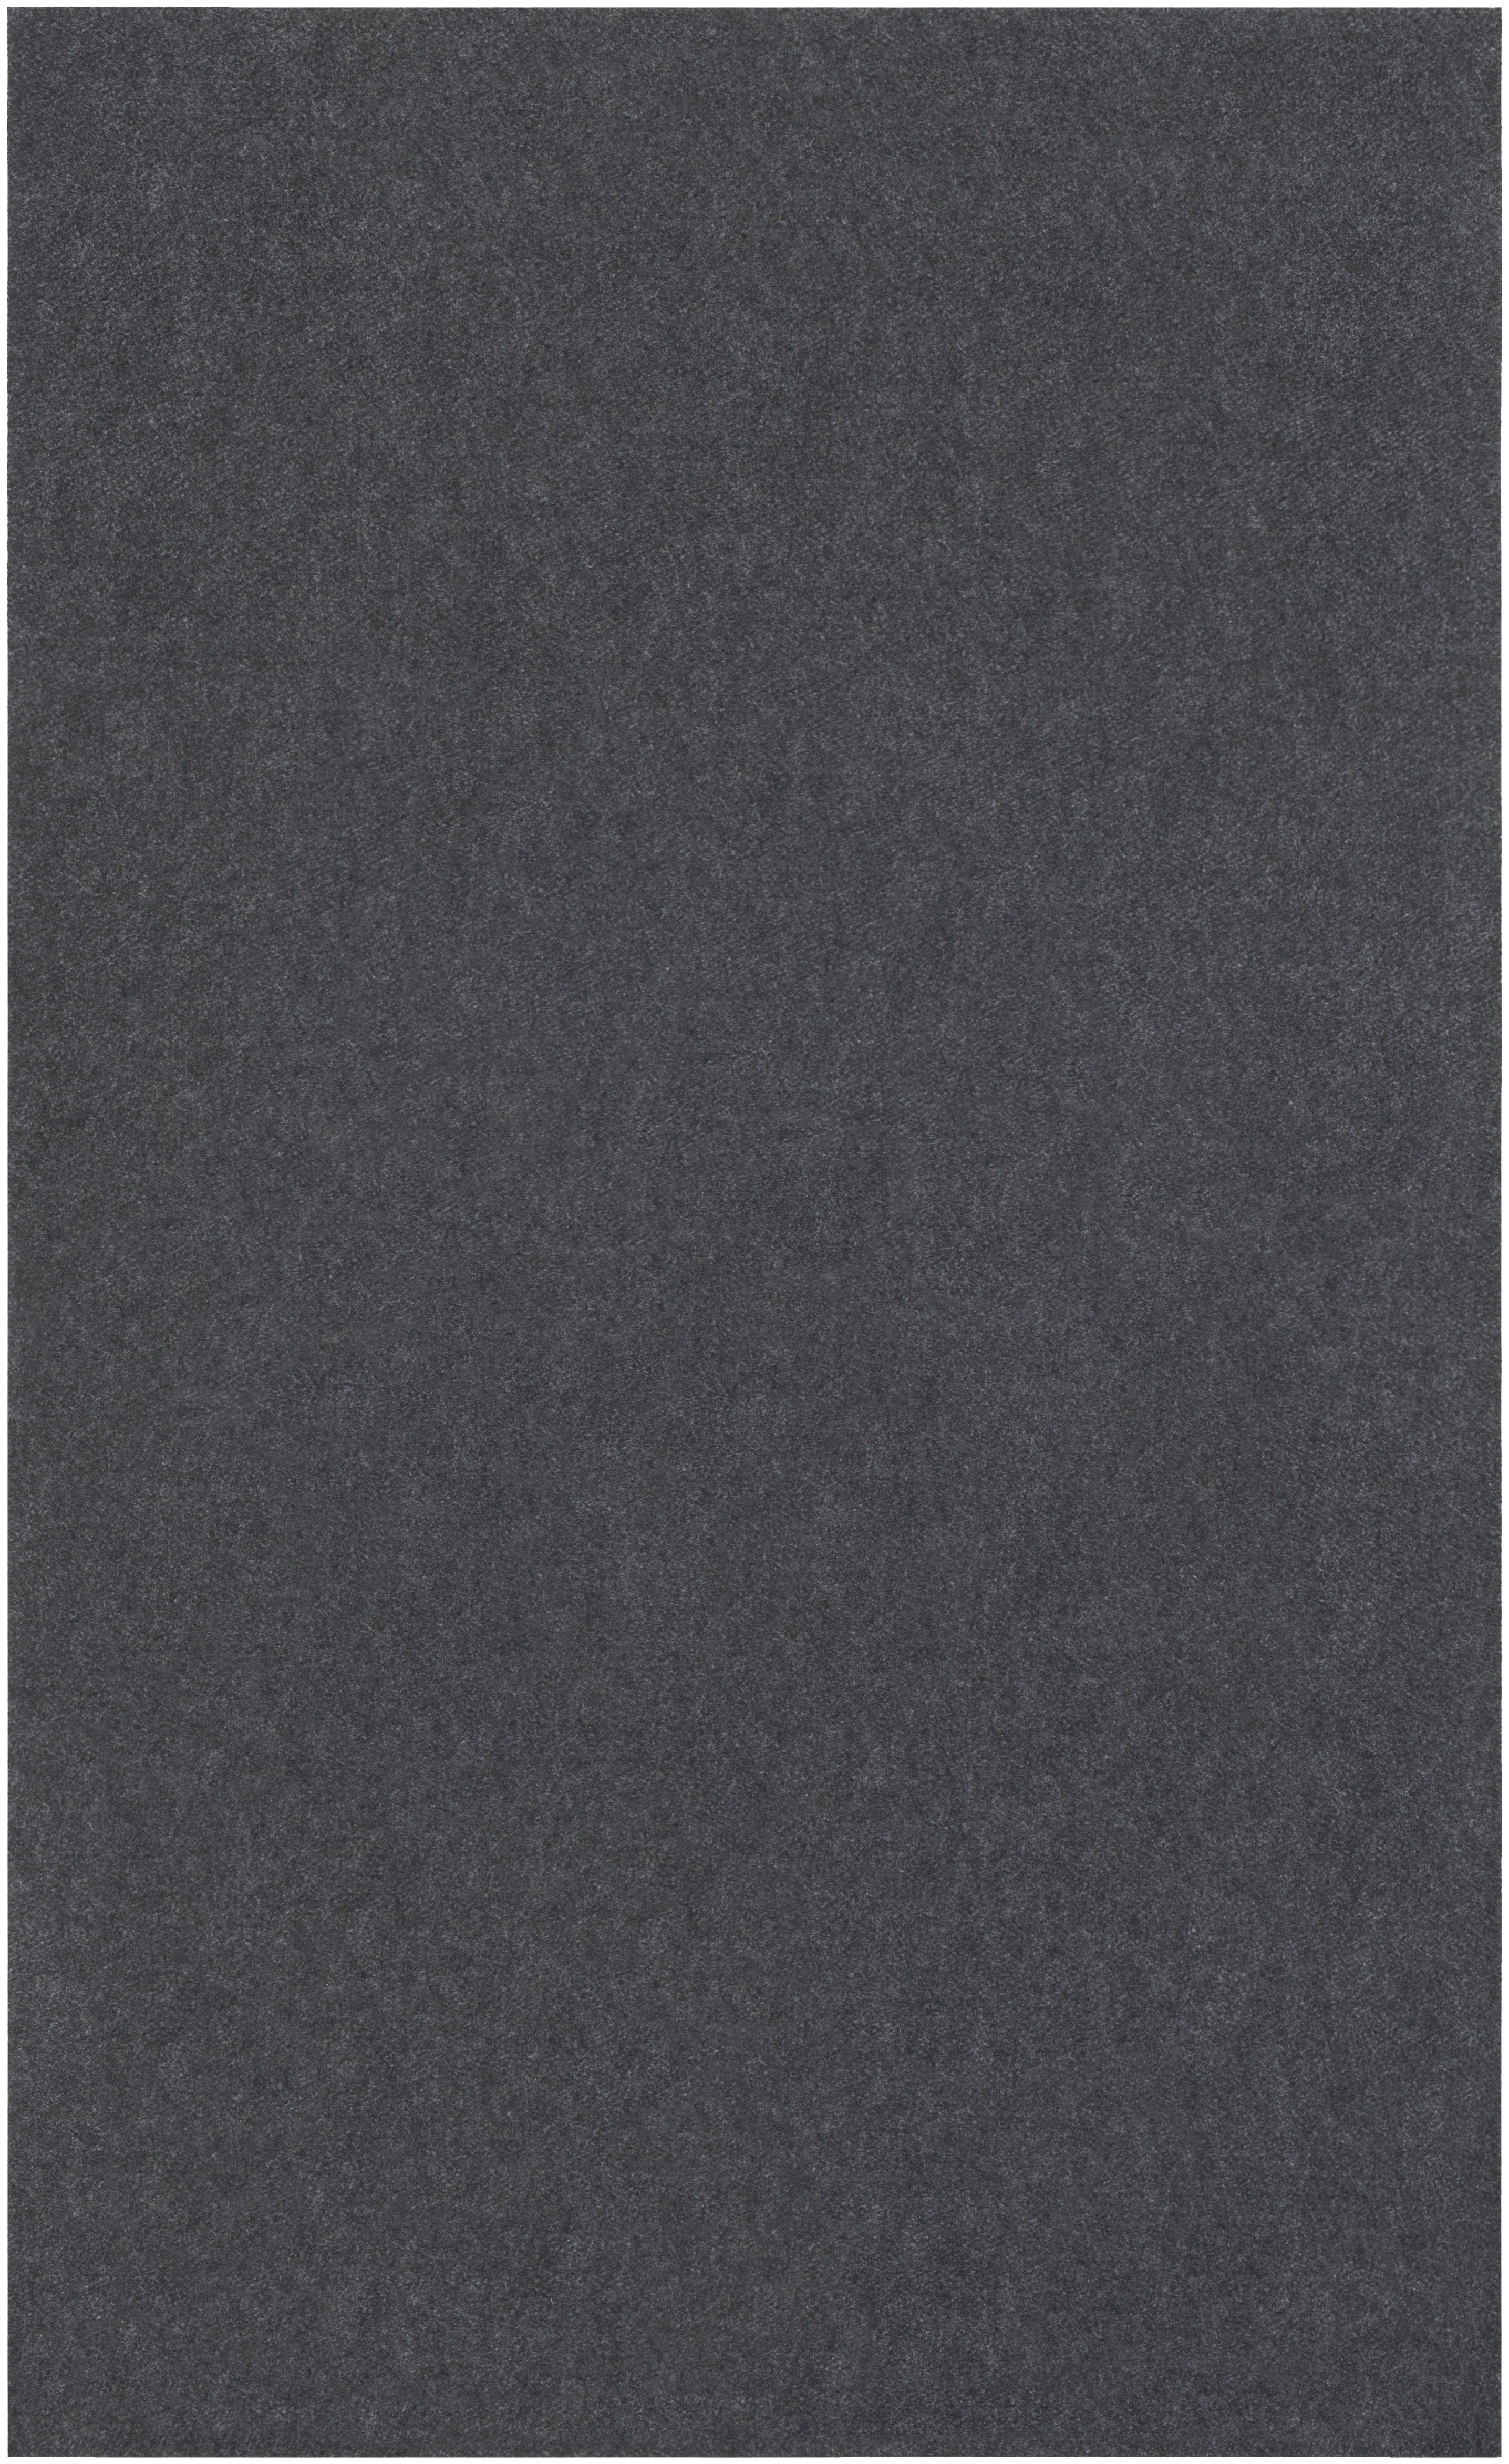 L & G Plush Rug Pad - Image 1